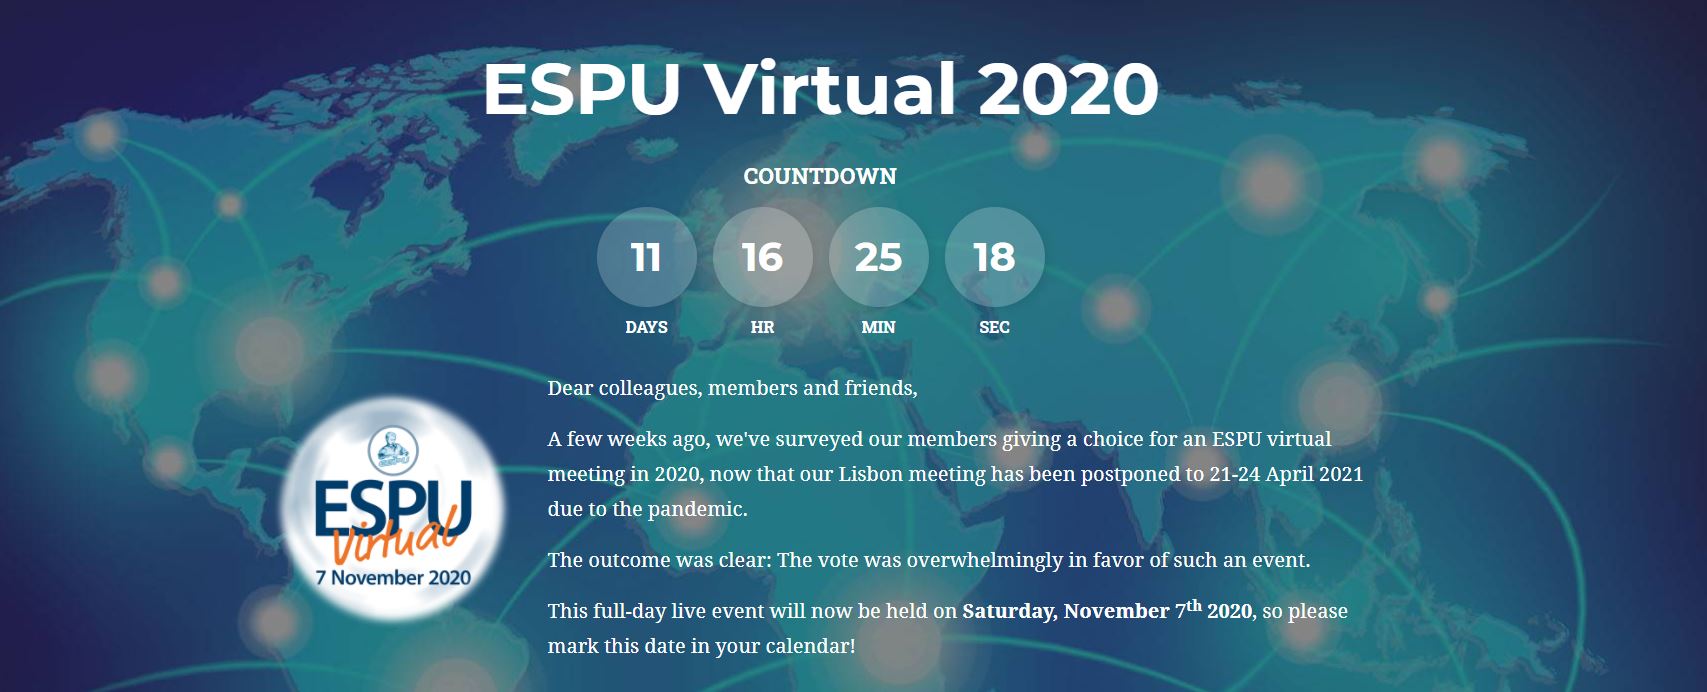 European Society for Paediatric Urology virtual meeting - ESPU 2020